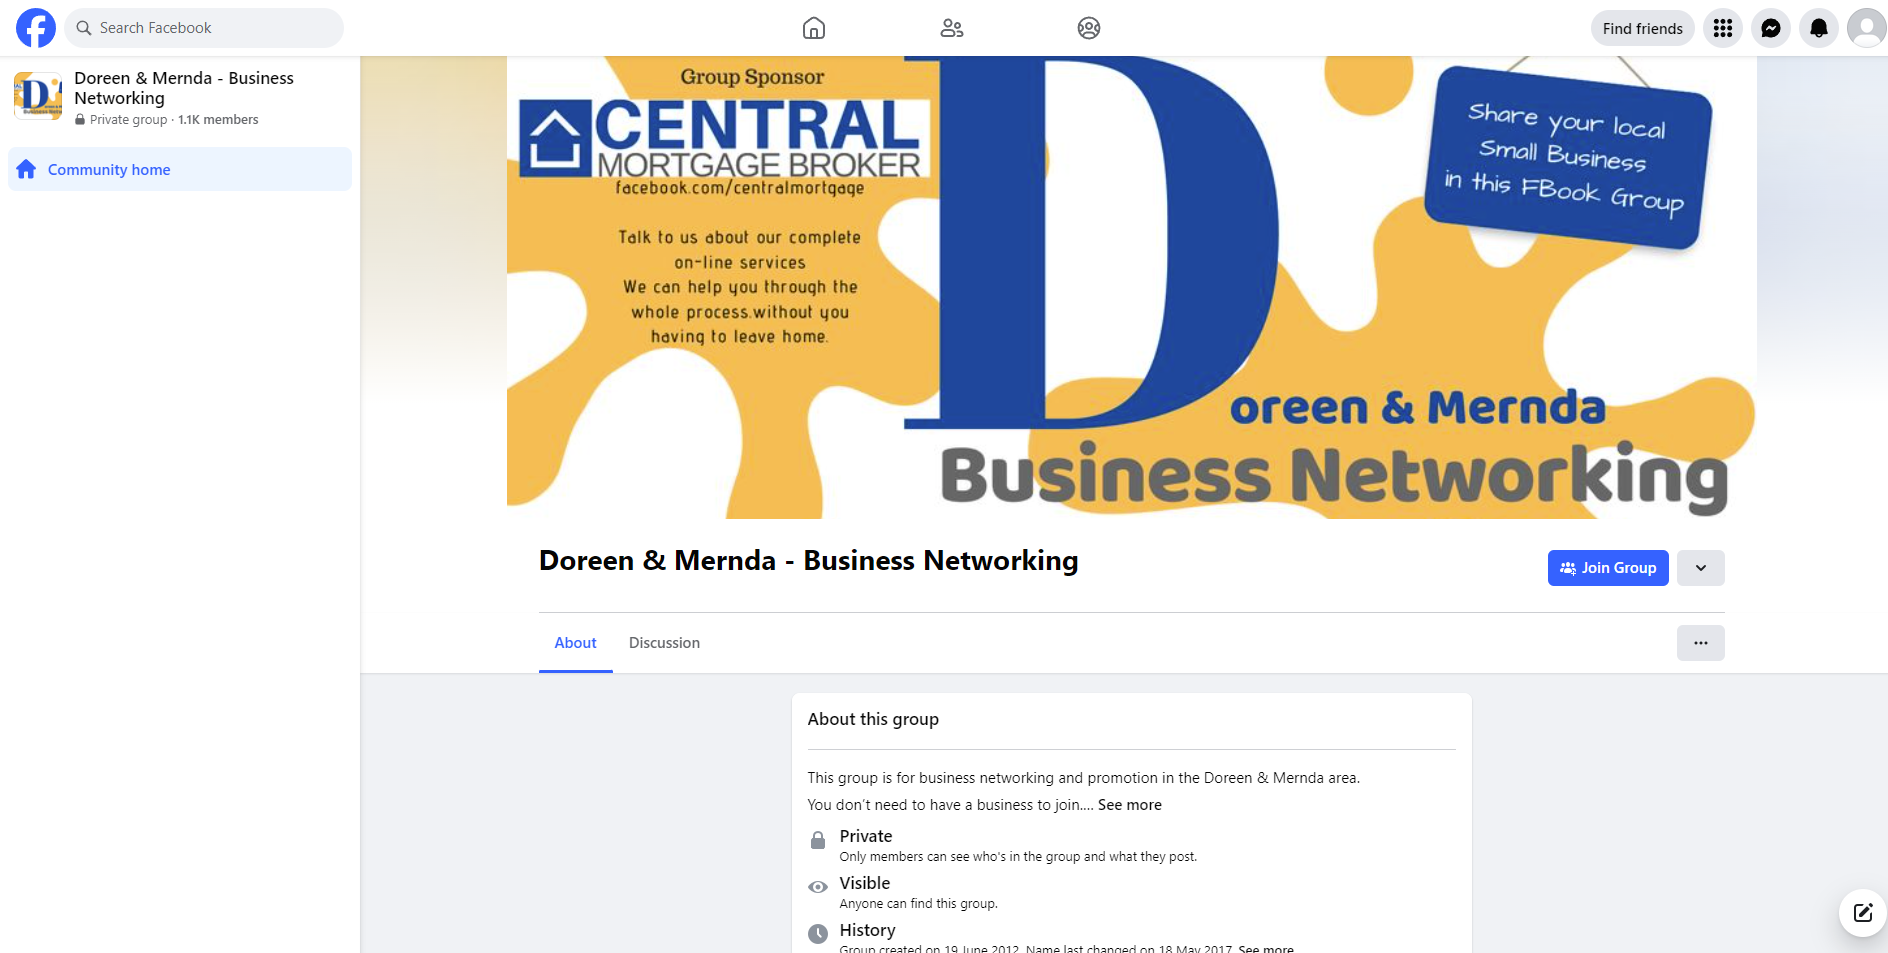 Doreen & Mernda - Business Networking